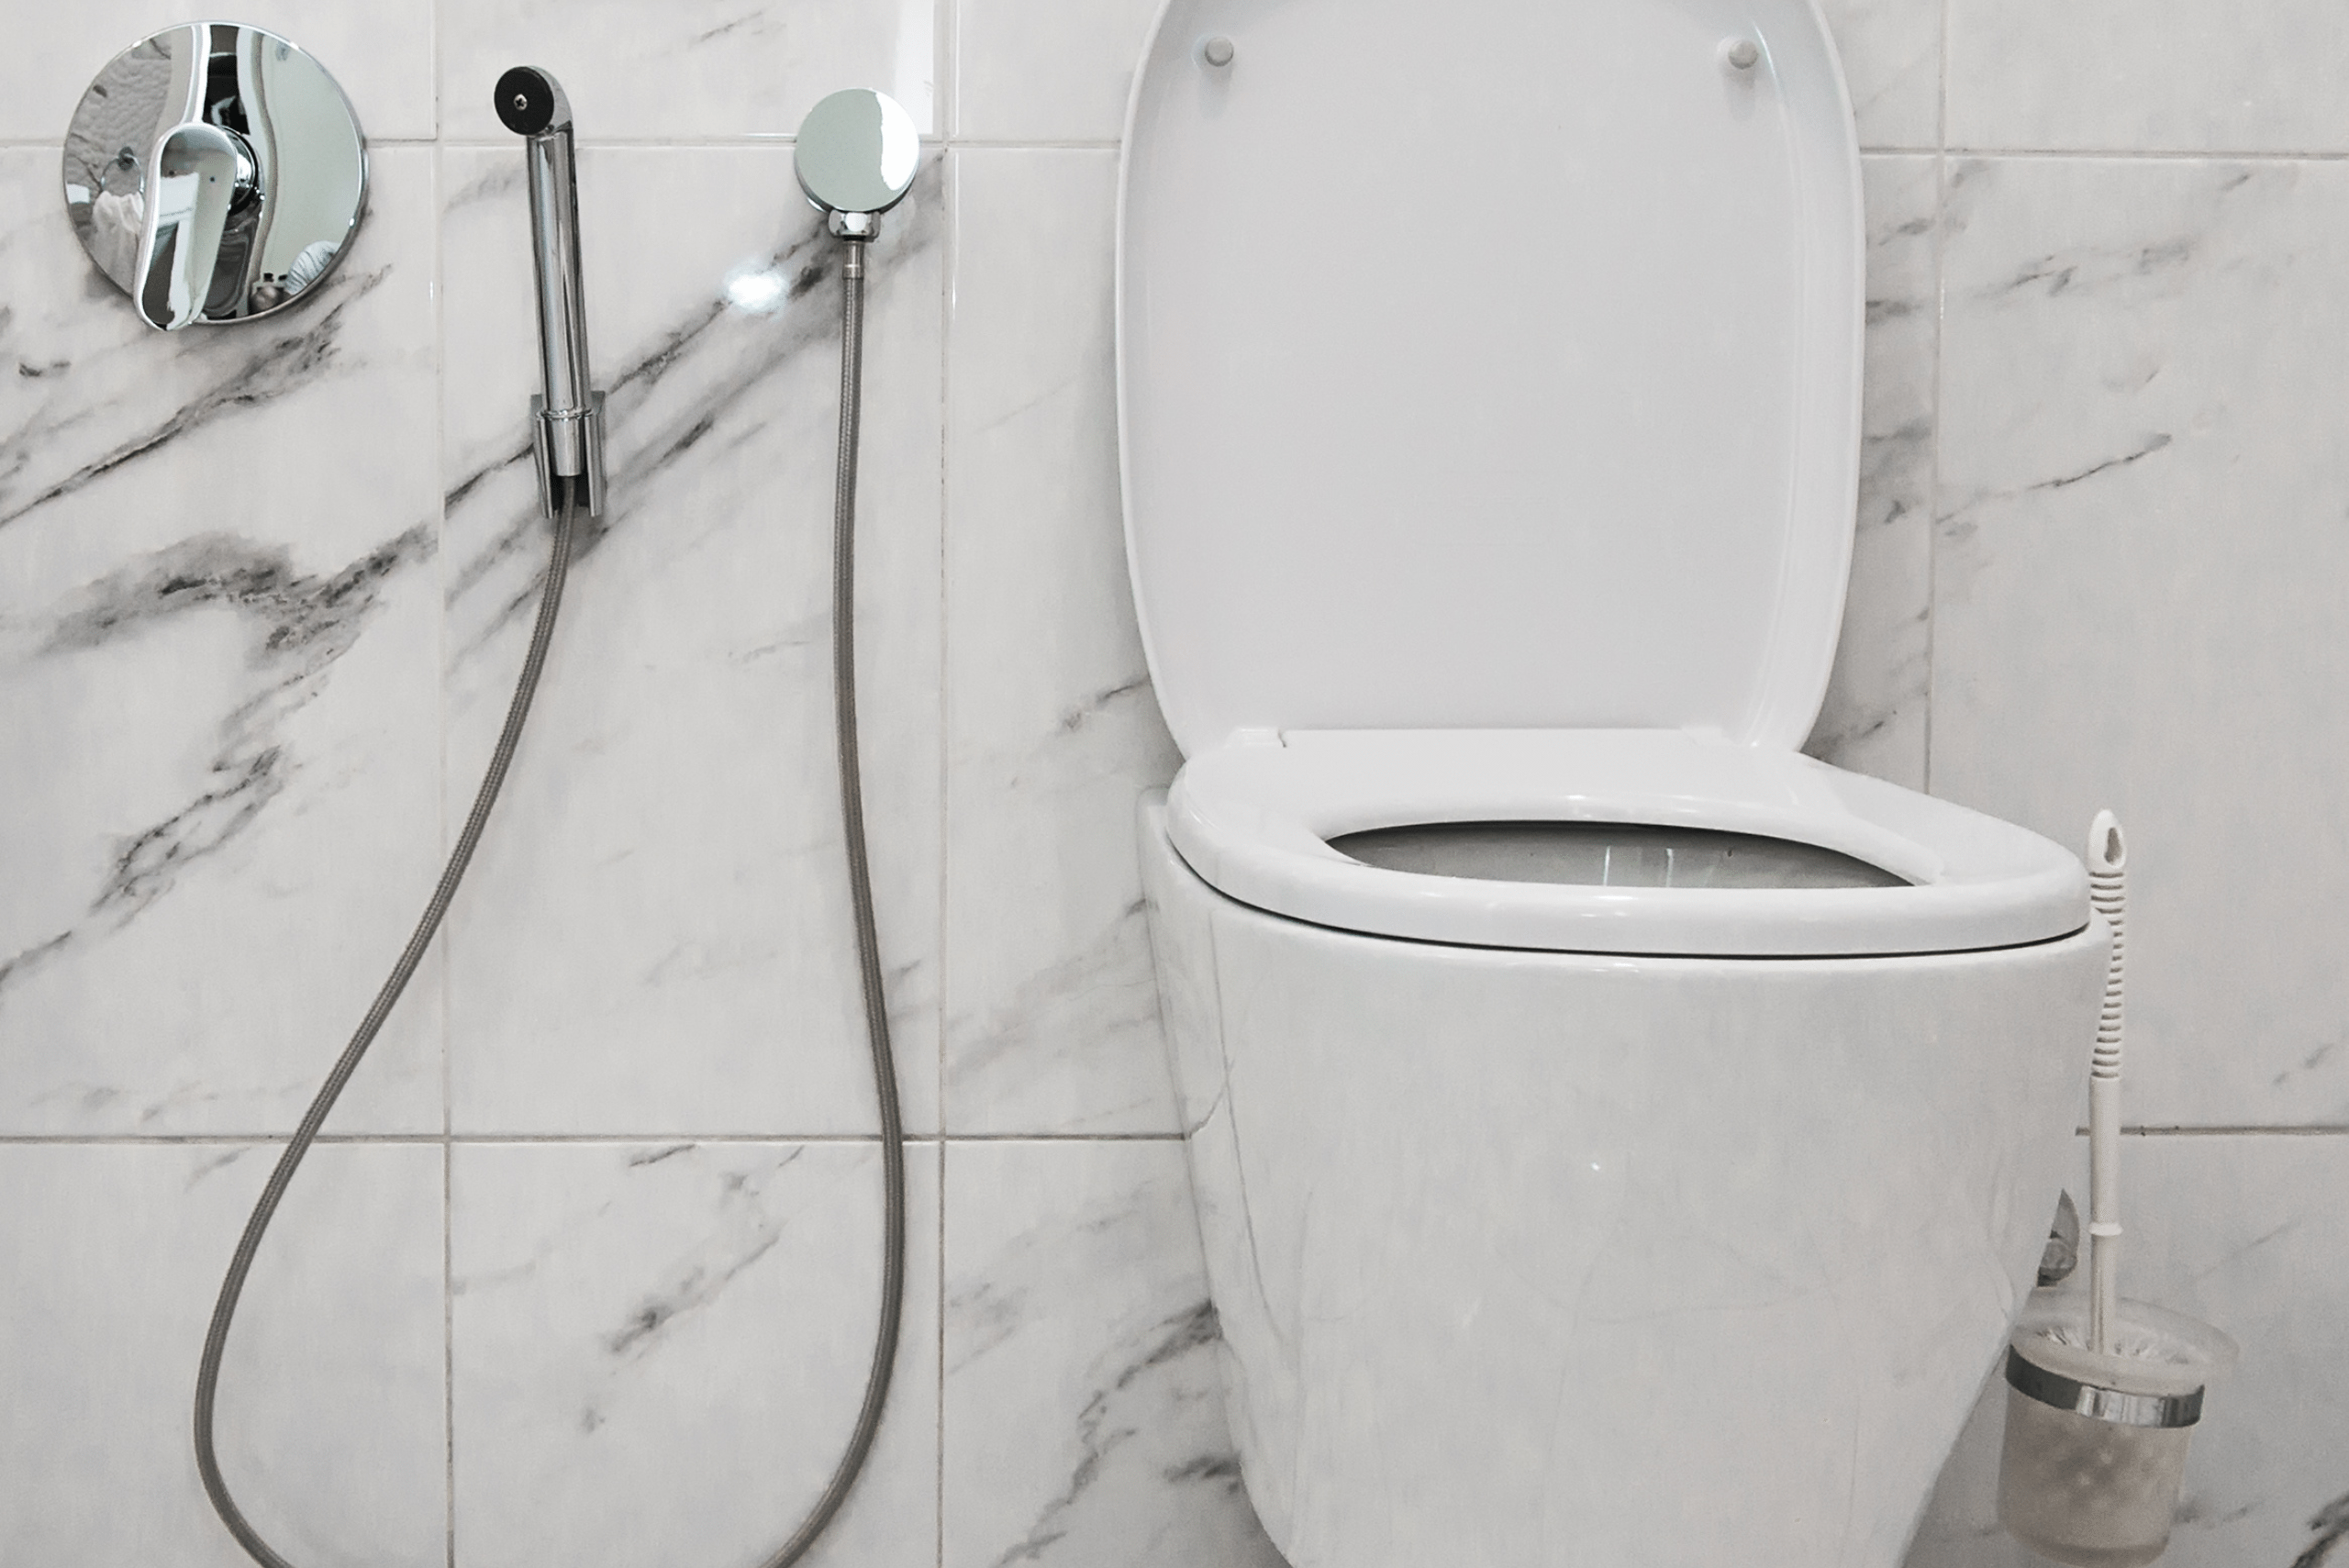 A hose-style bidet mounted beside a toilet in bathroom.